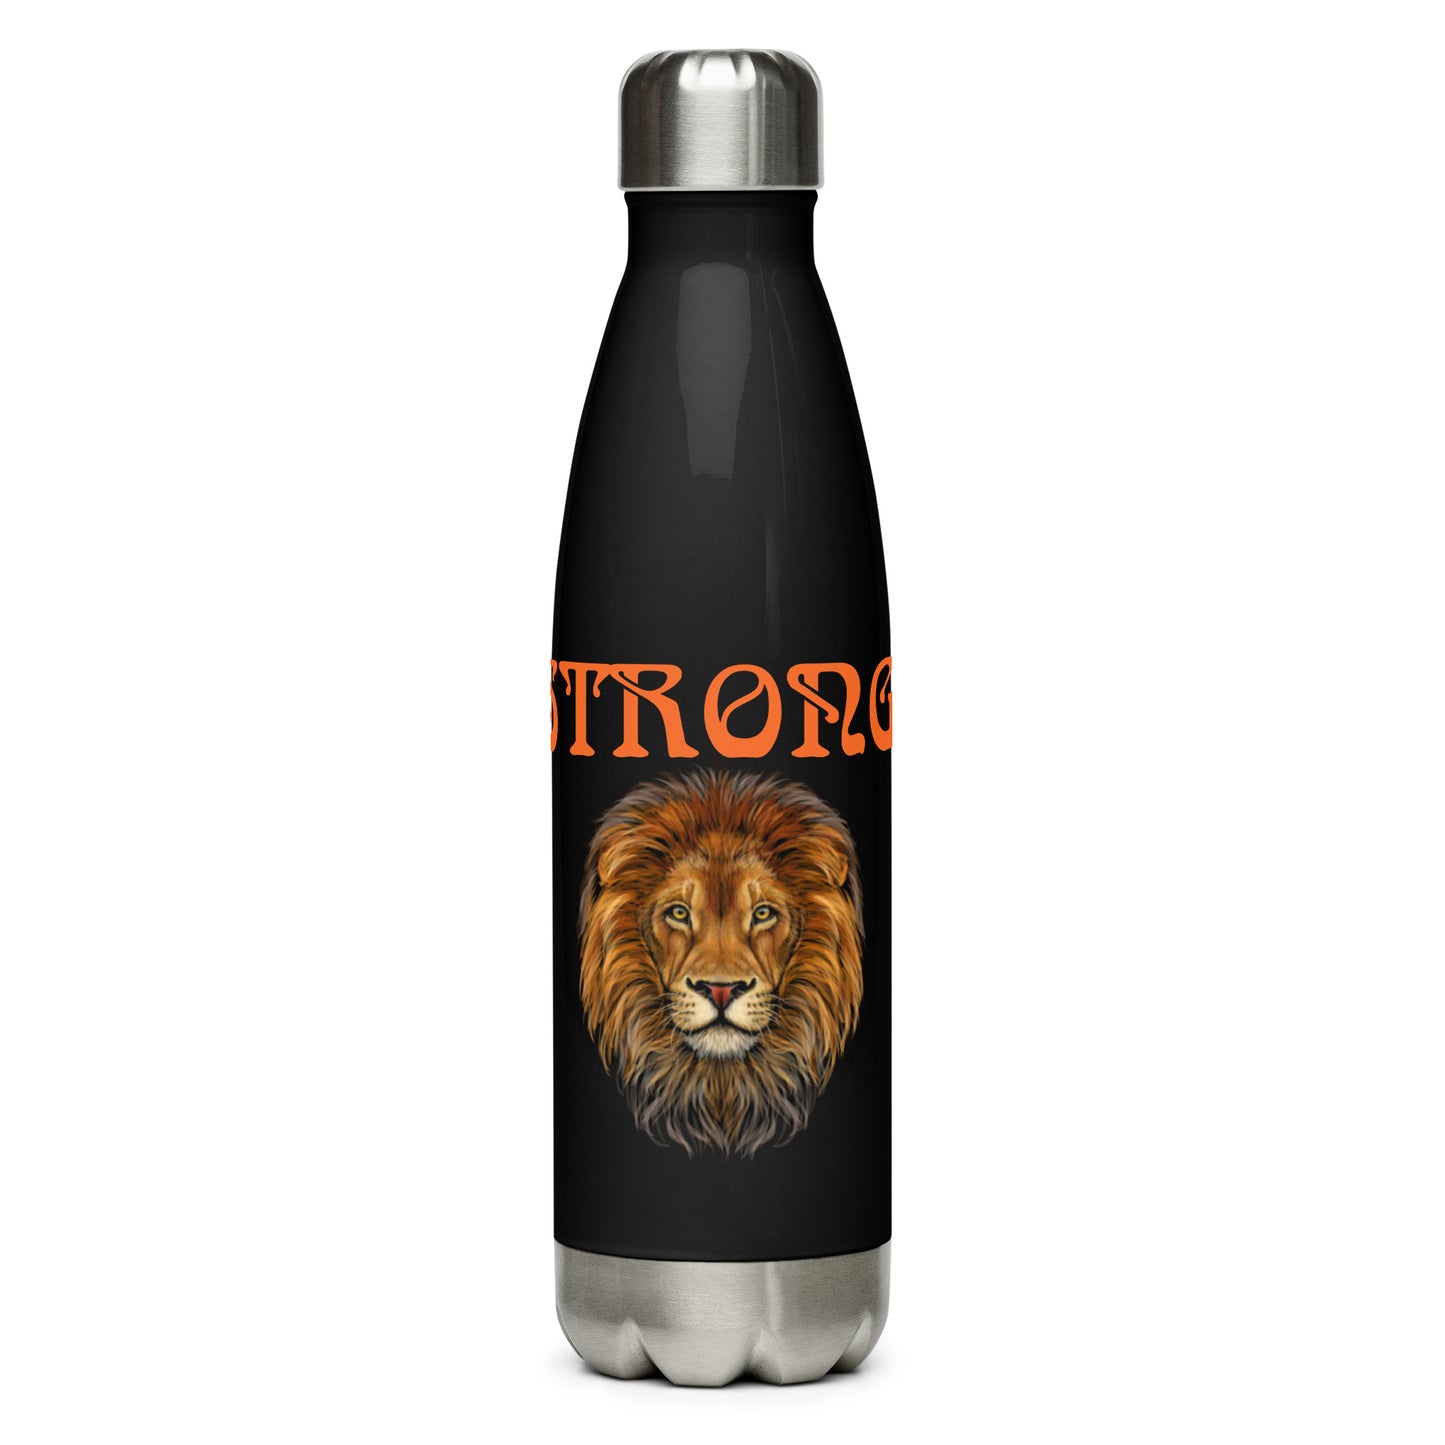 “STRONG”Stainless Steel Water Bottle W/Orange Font